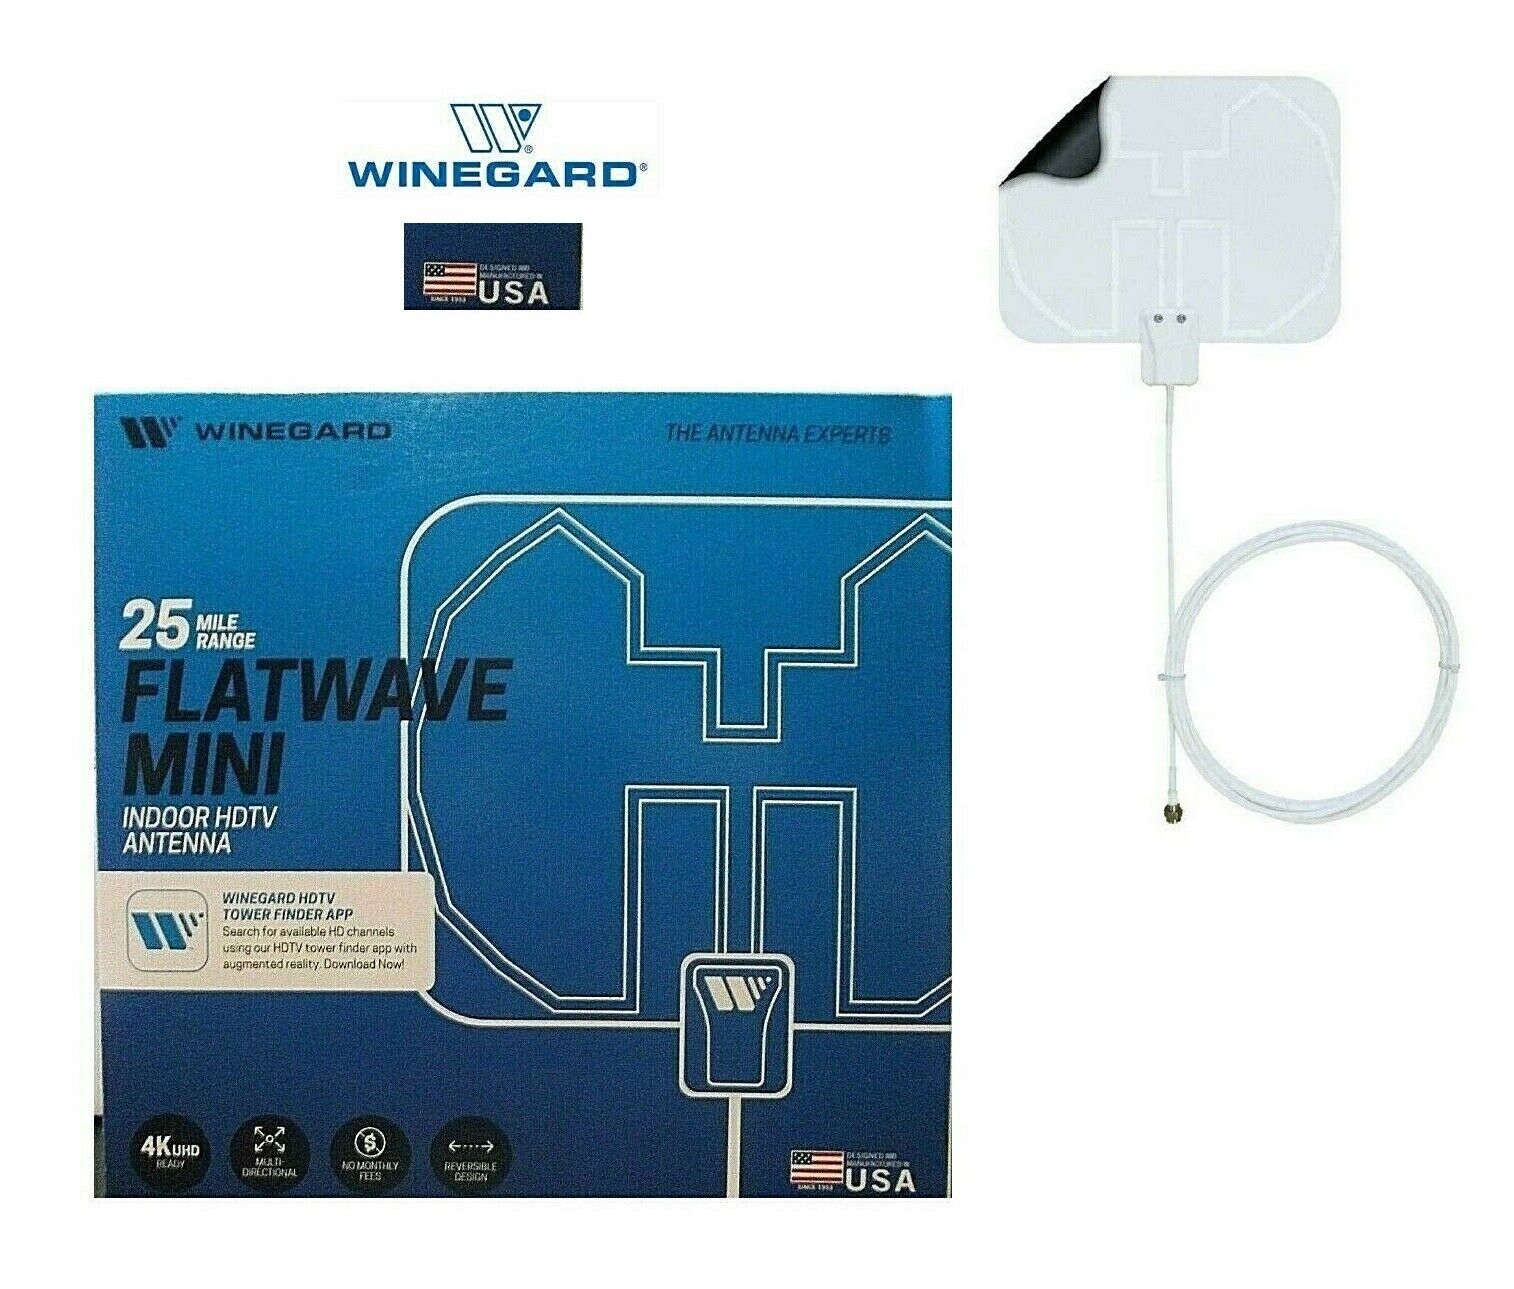 WINEGARD FlatWave Mini Razor Thin HDTV Digital Indoor Antenna FL-4000 New. Available Now for 18.99